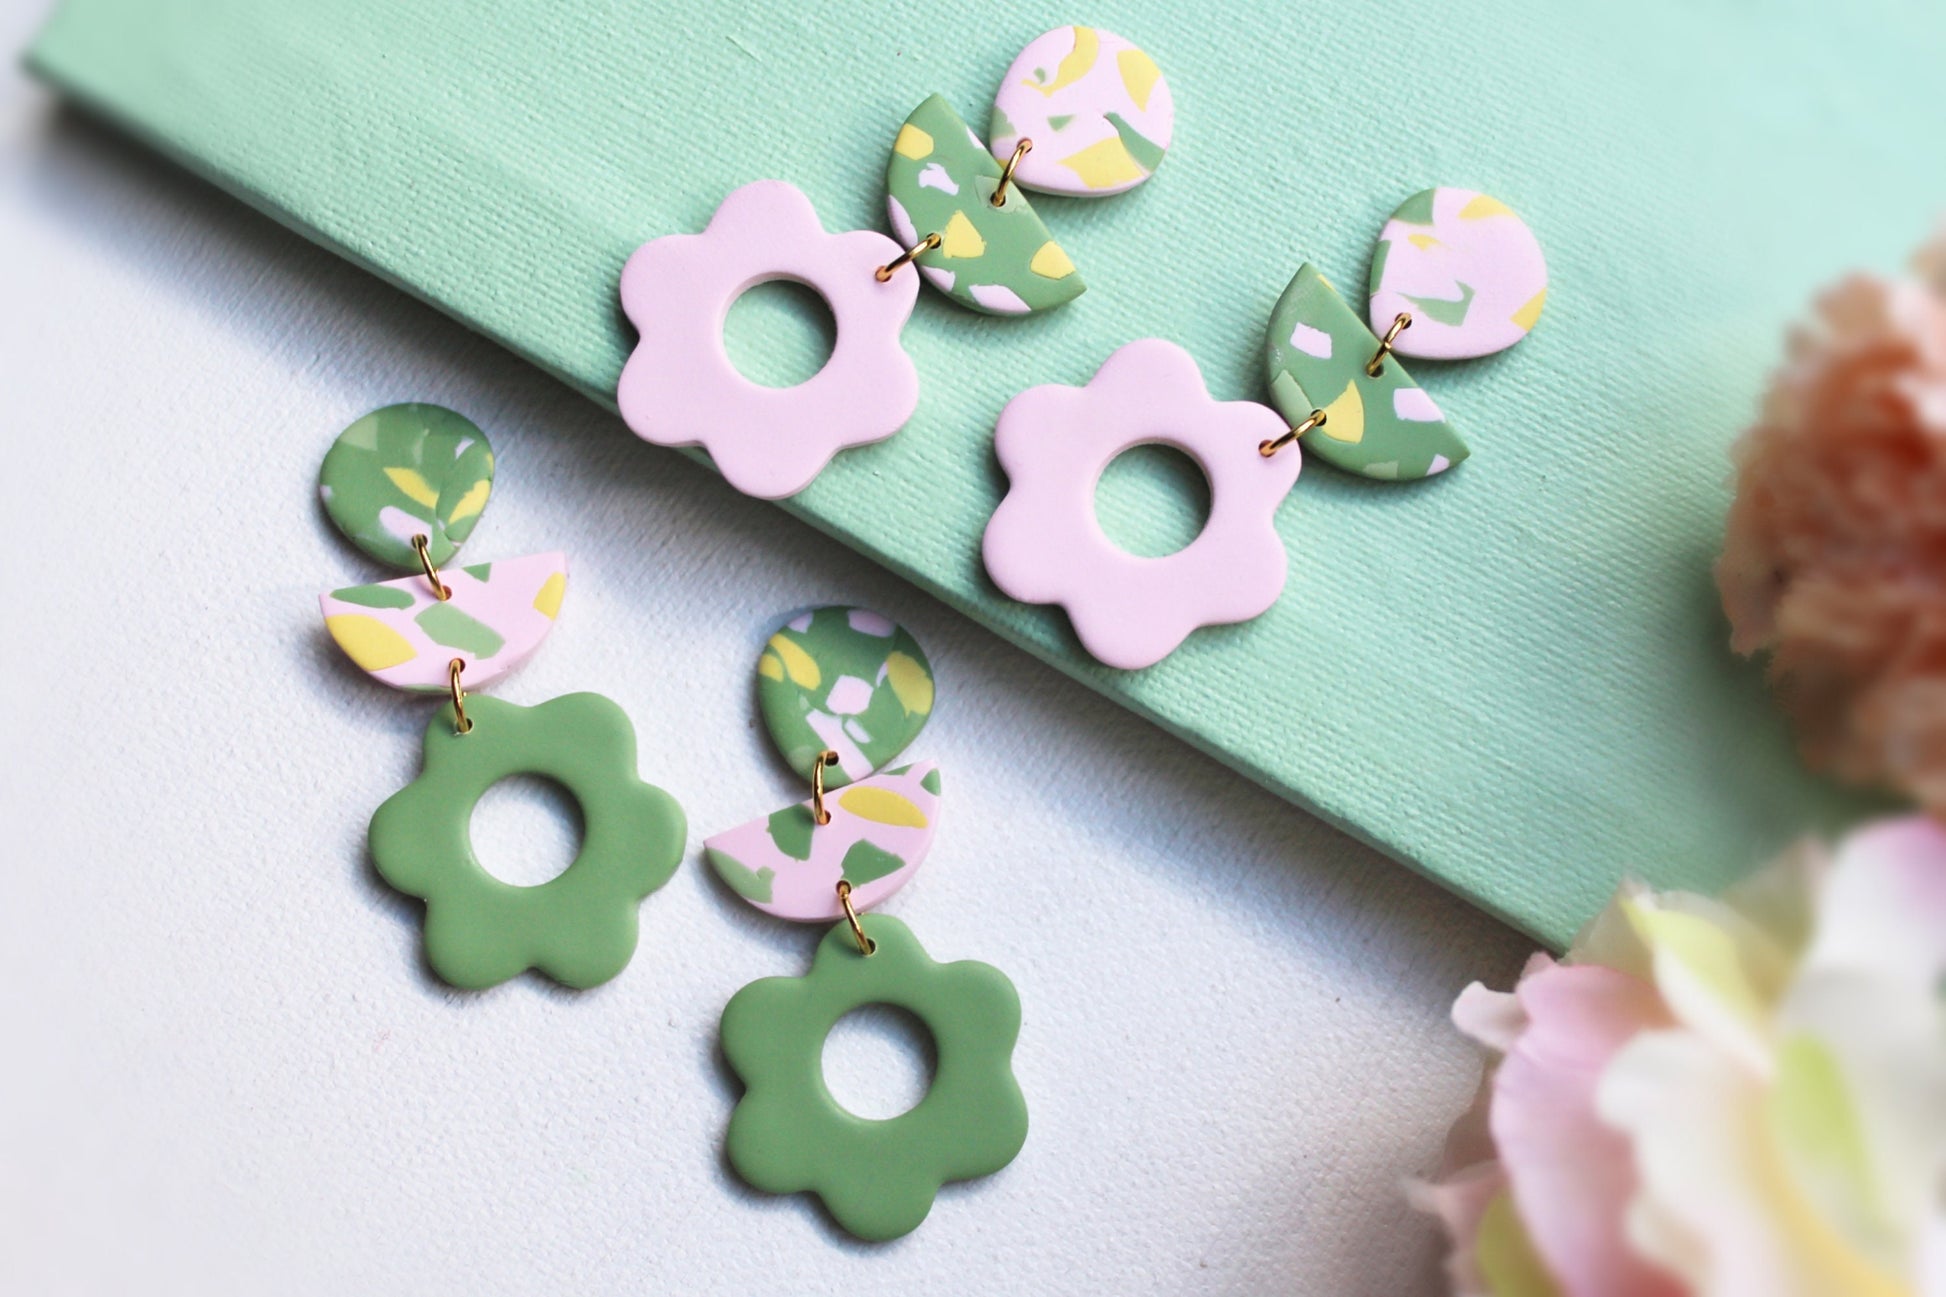 Floral Earrings, Flower Earrings, Polymer Clay Earrings, Spring Earrings, Statement Earrings, Green, Pink, Earrings, Handmade Clay Earrings